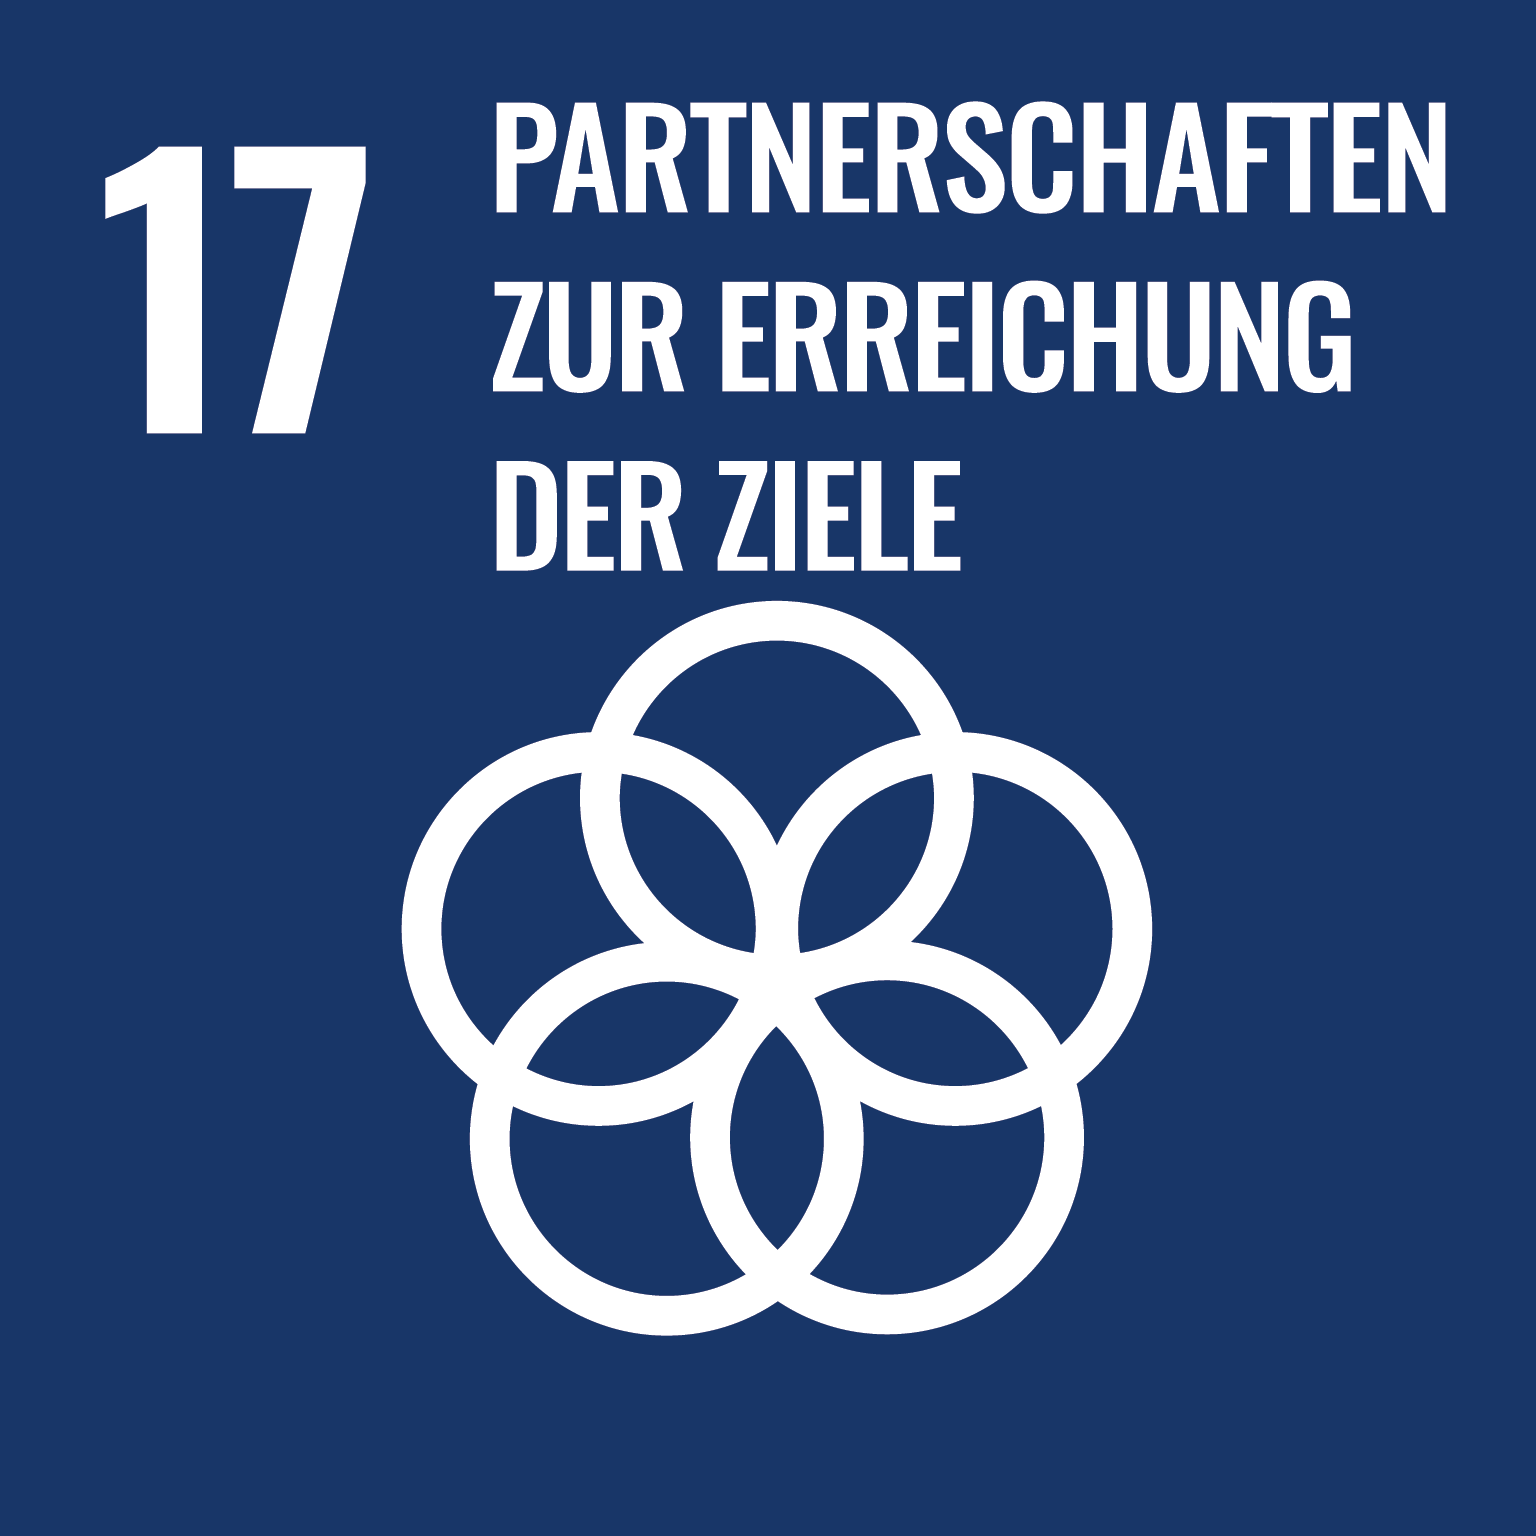 social development goal 17: Partnerschaften zur Erreichung der Ziele